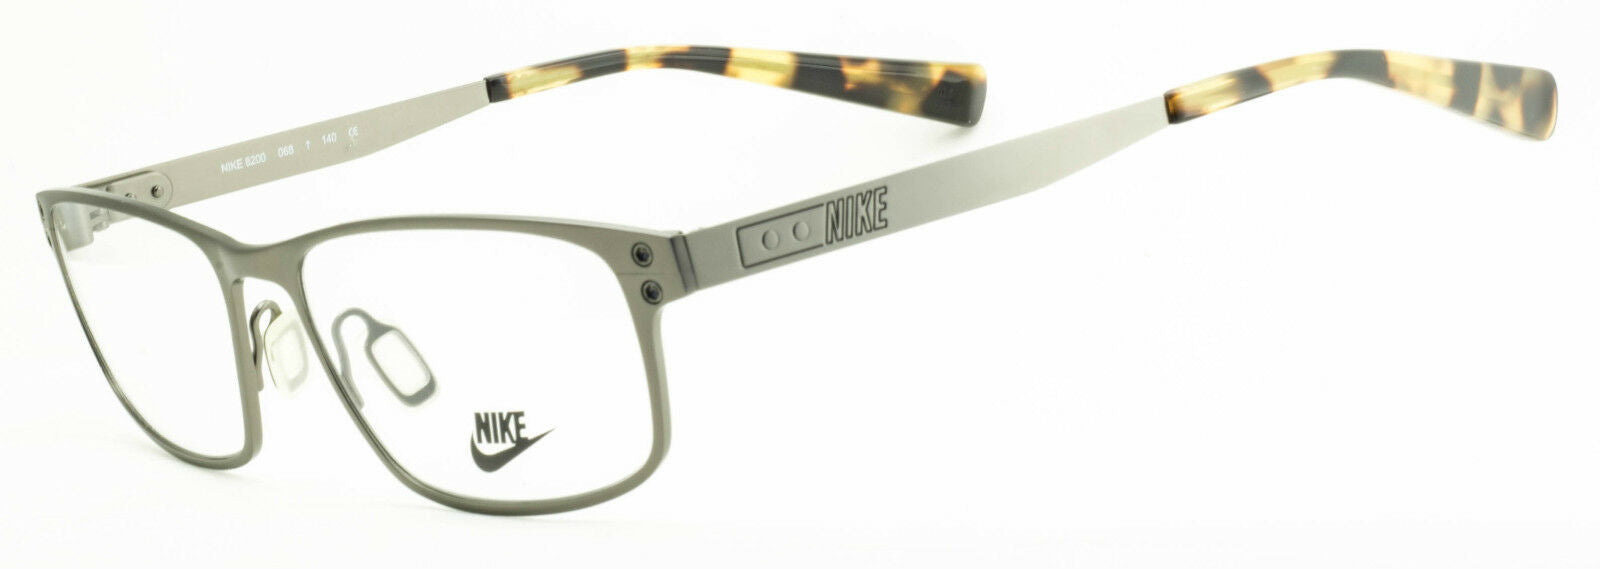 NIKE VISION 8200 068 FRAMES RX Optical Glasses Eyeglasses Eyewear - New  BNIB